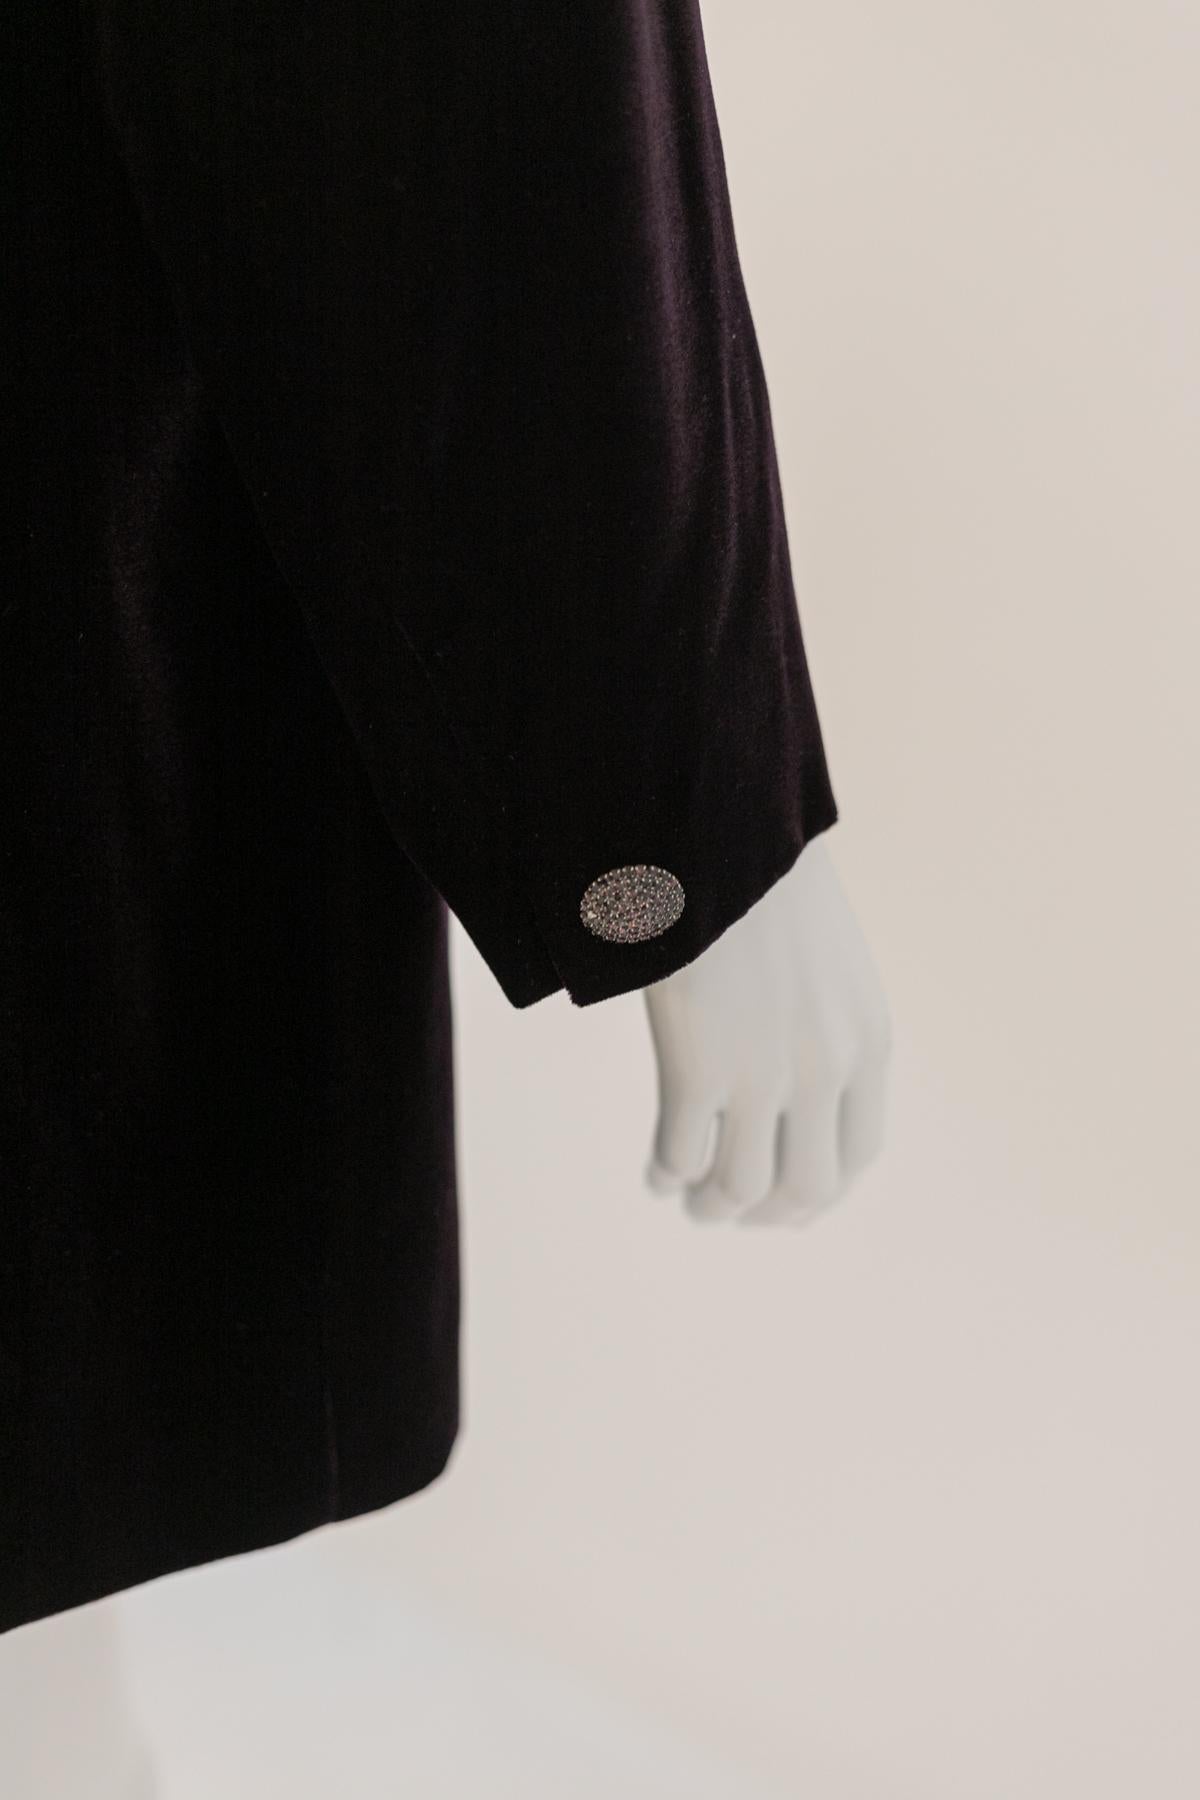 Women's Marina Rinaldi Elegant Italian Jacket For Sale